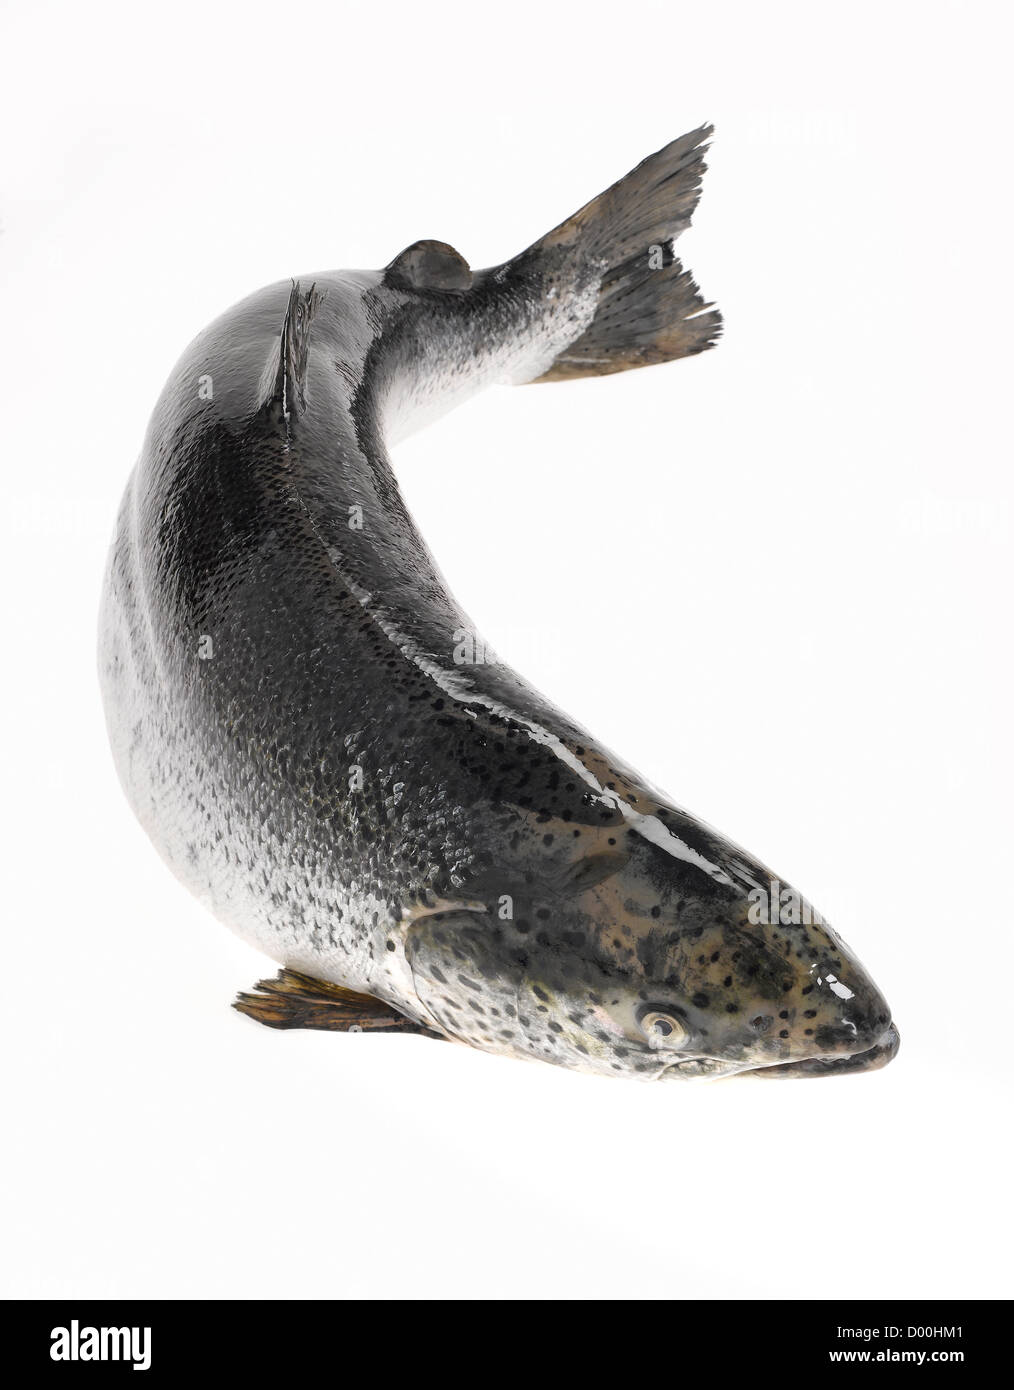 whole salmon fish Stock Photo